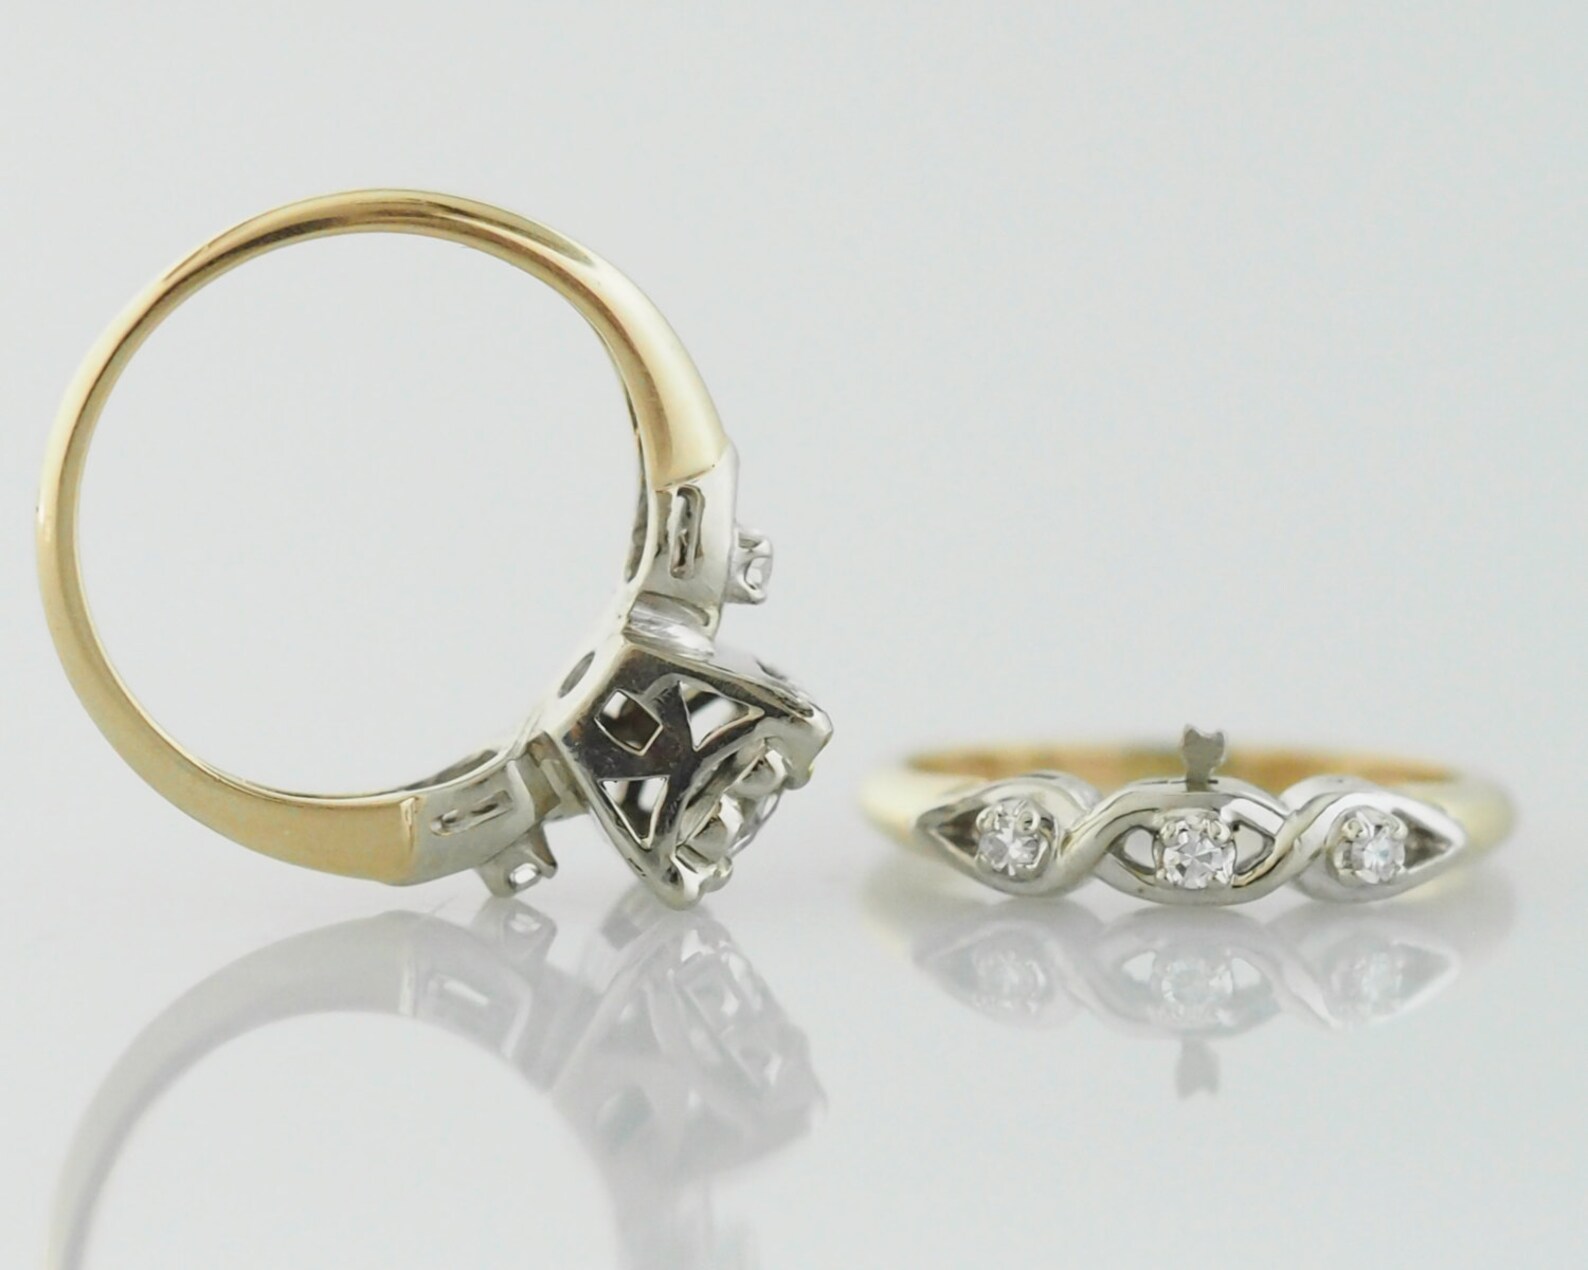 Circa 1950s Vintage Flare Diamond Ring and Wedding Band | Etsy